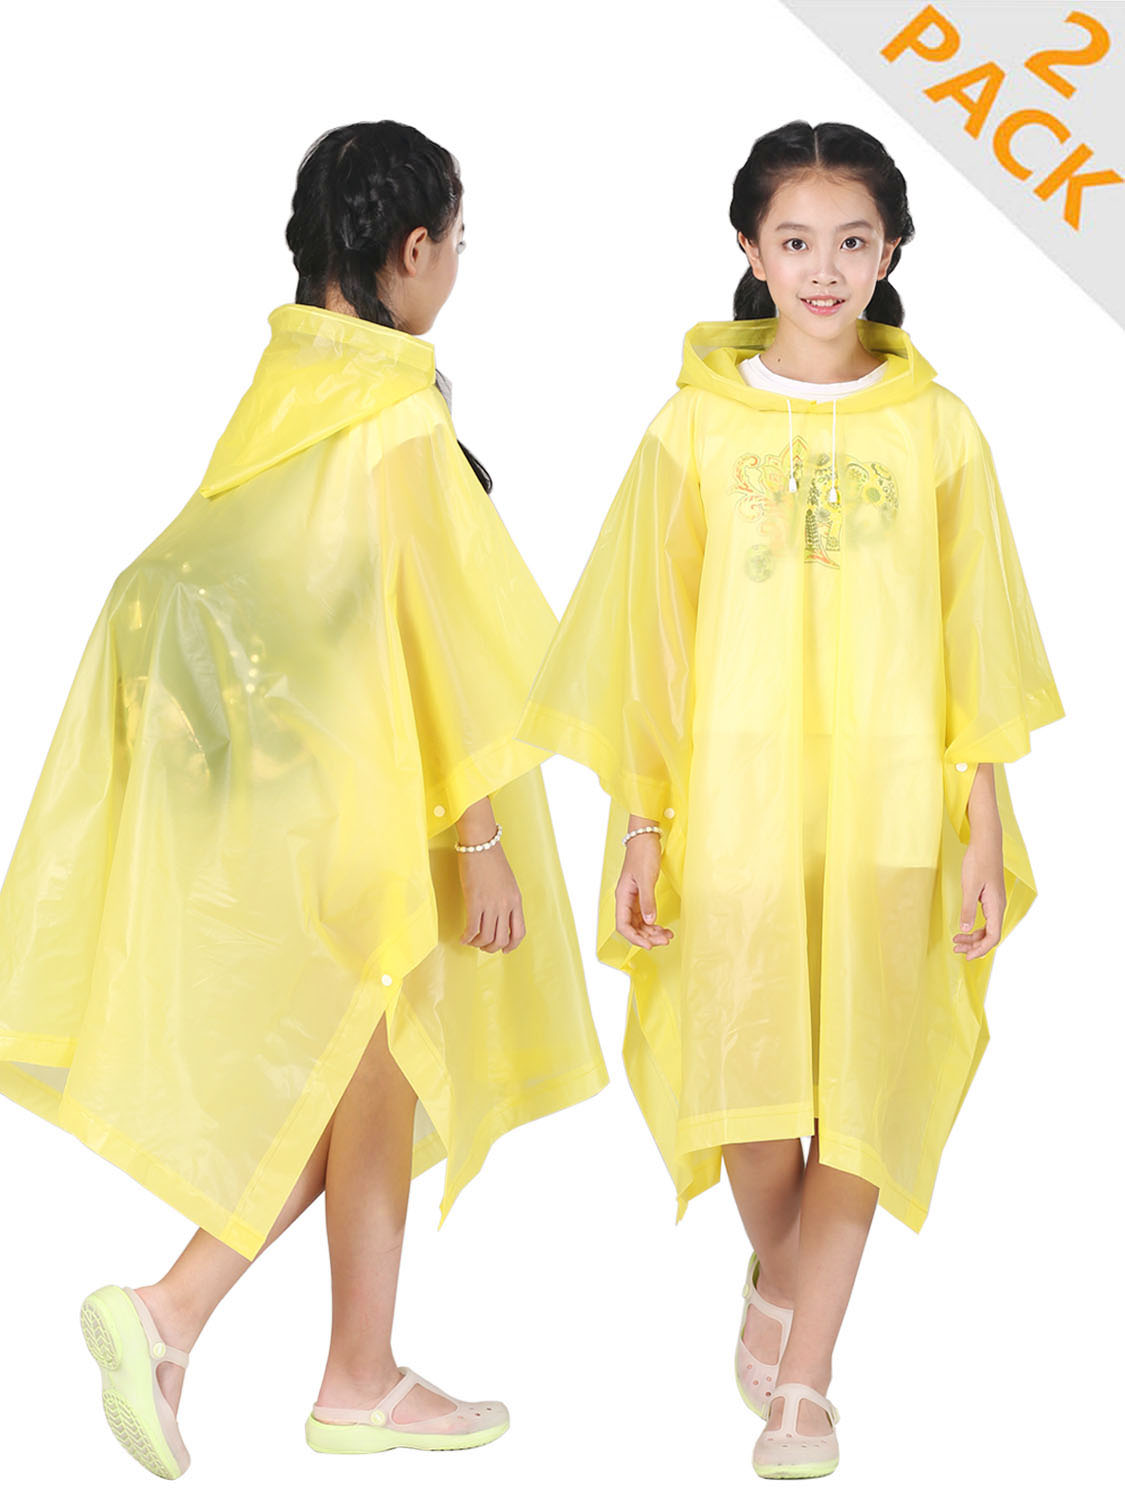 HLKZONE Rain Ponchos for Kids, [2 Pack] EVA Emergency Reusable Outwear Rain Coats Jacket with Drawstring Hood